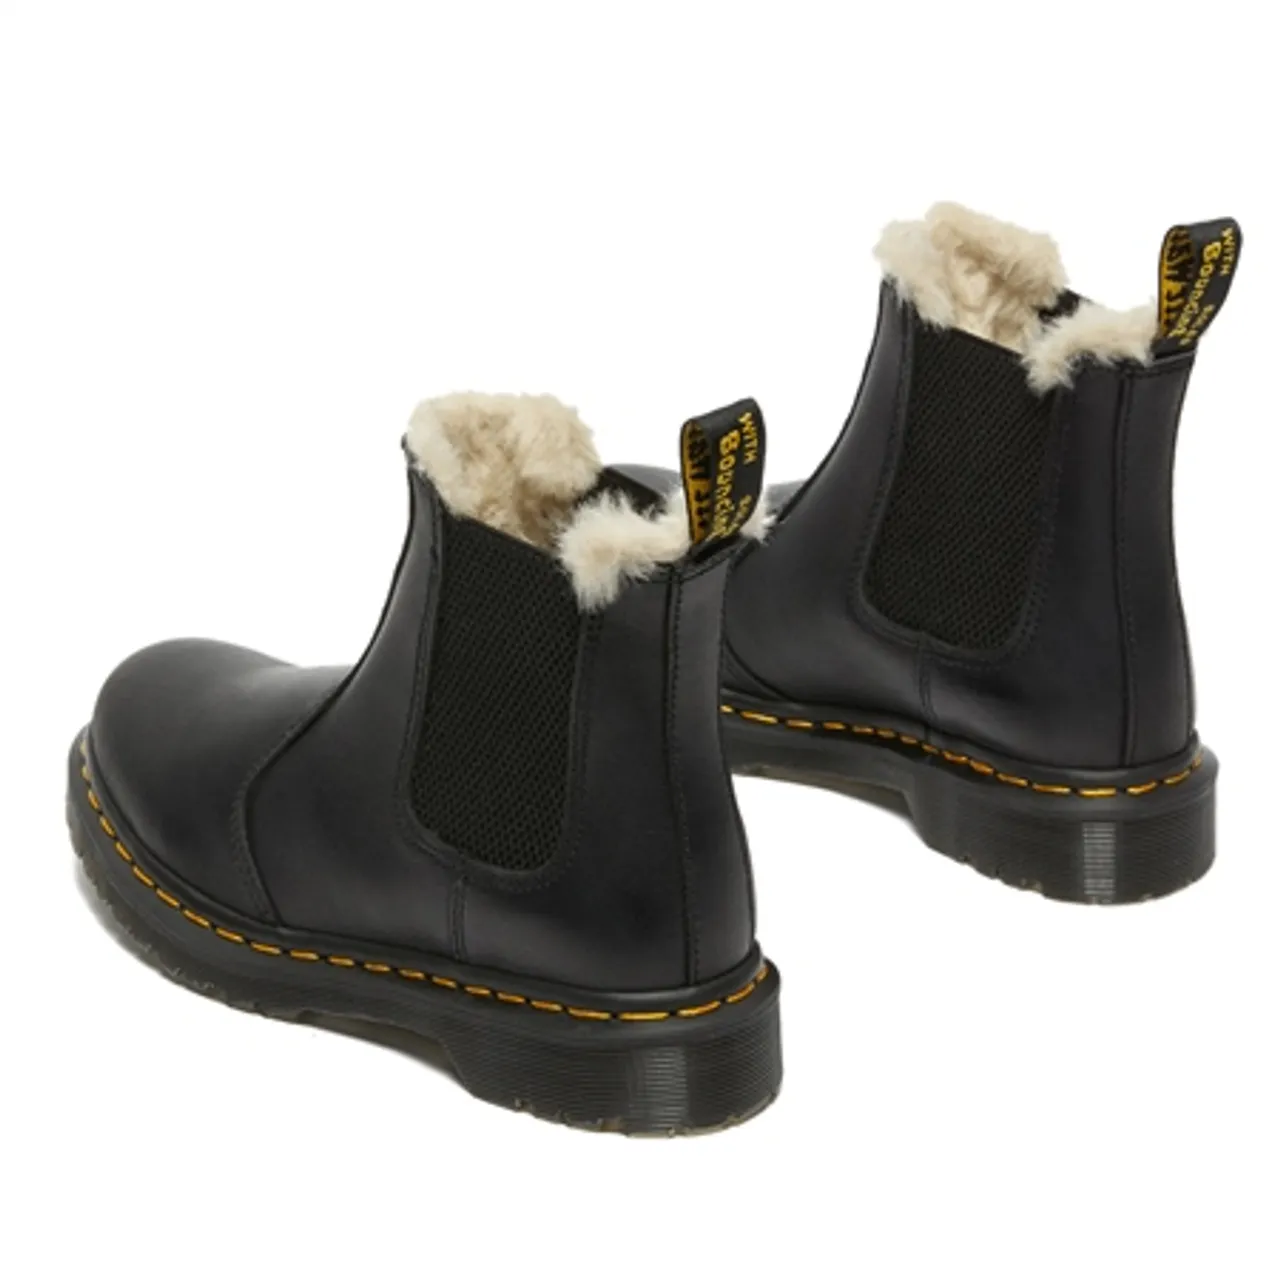 Dr Martens 2976 Leonore Wyoming Boots - Black - UK 4 (EU 37)